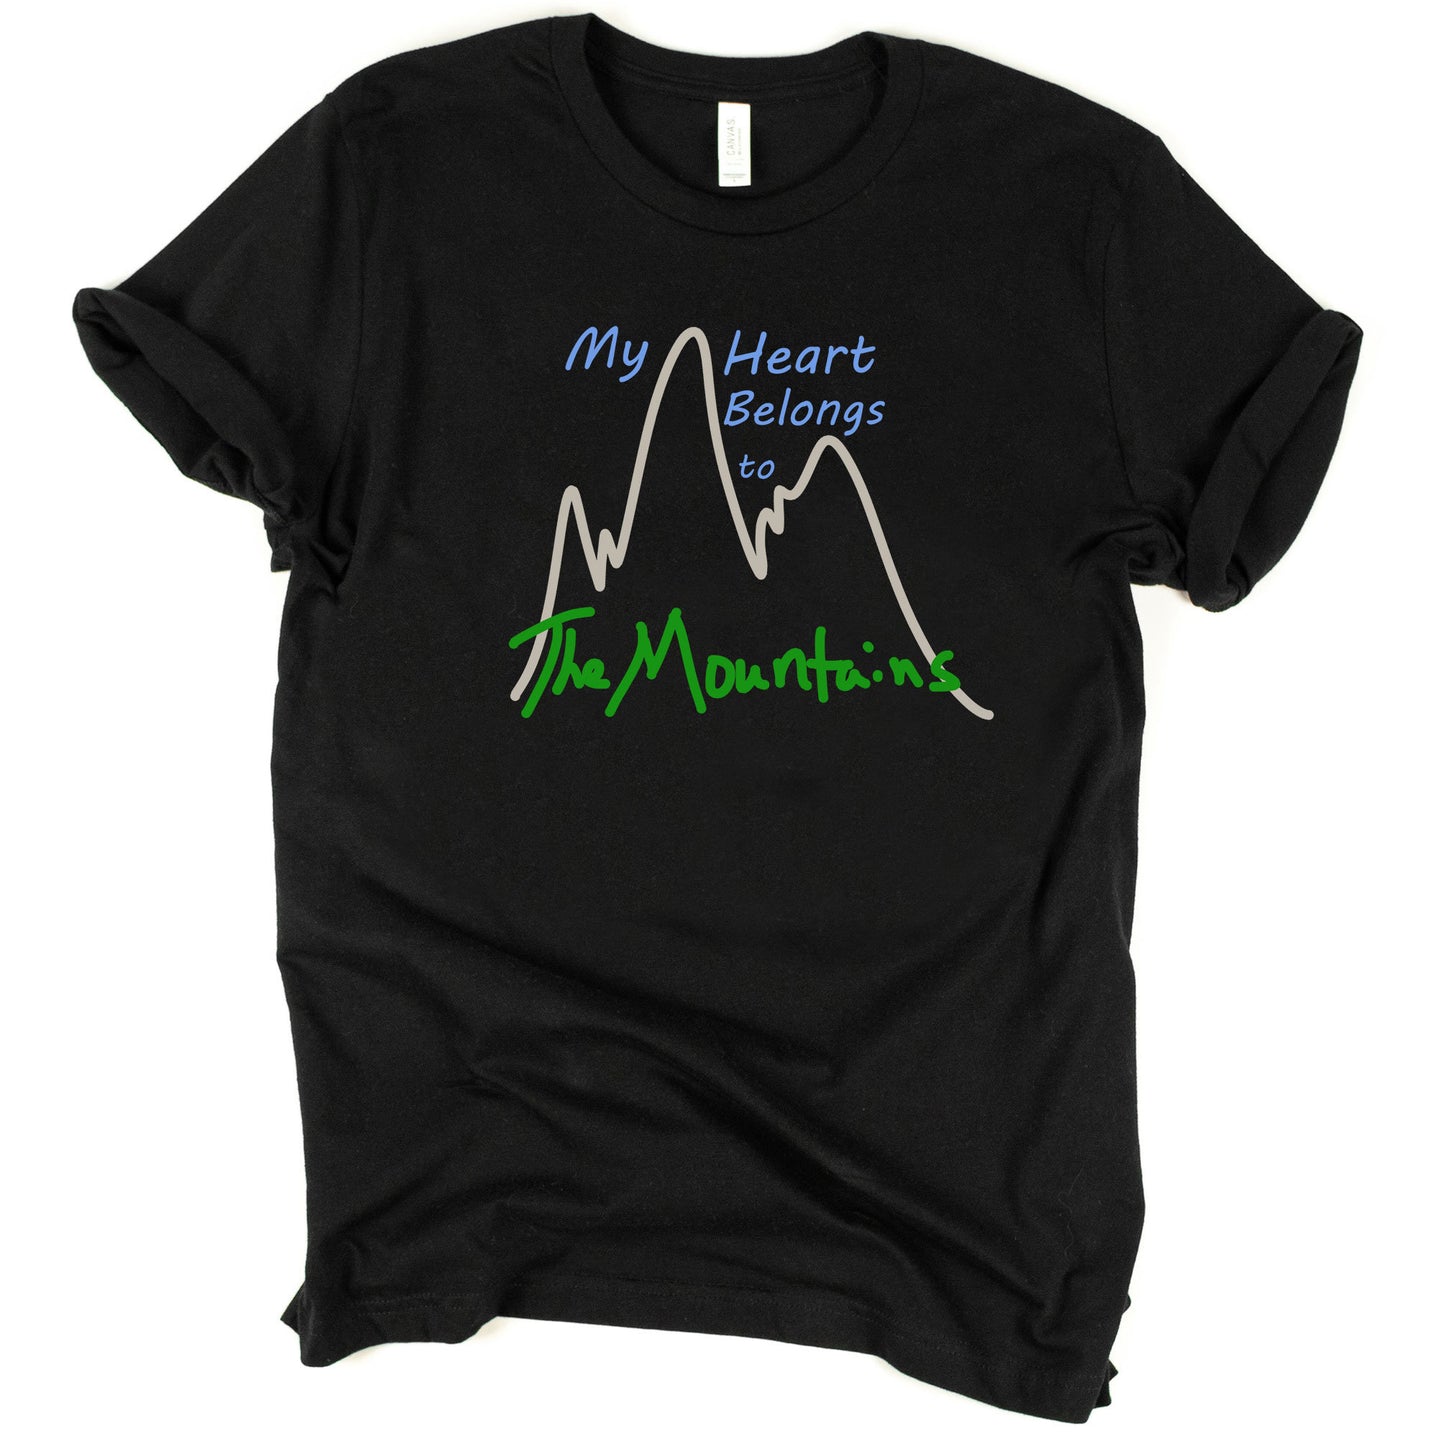 My Heart Belongs to the Mountains Shirt